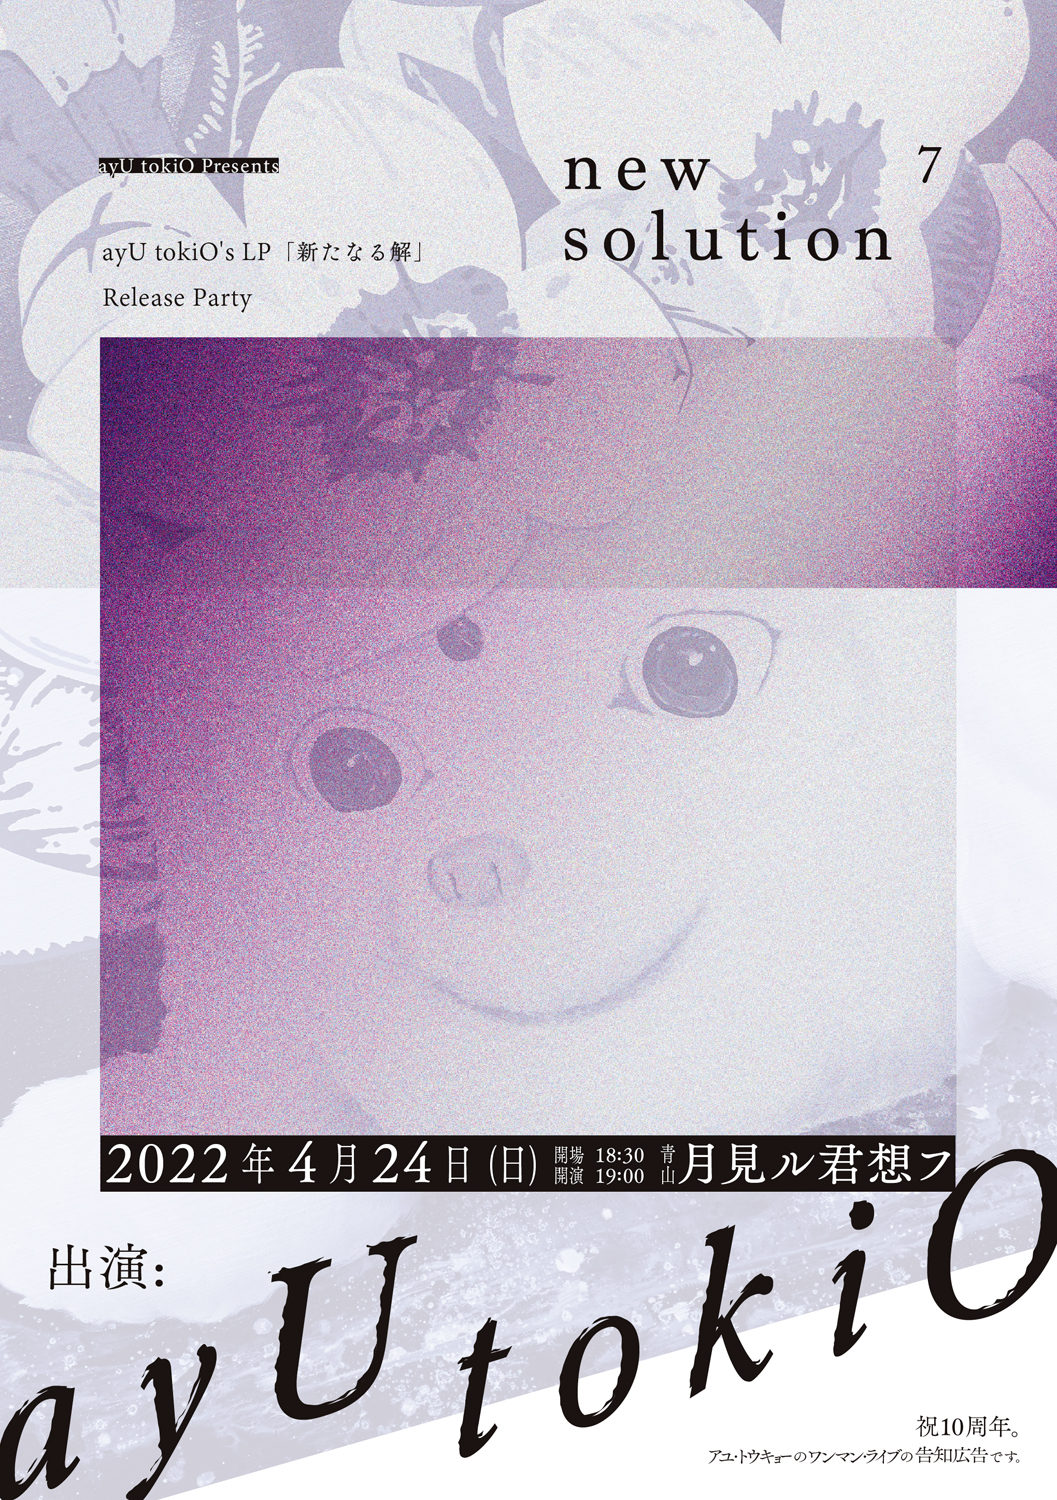 ayU tokiO Presents "new solution 7"